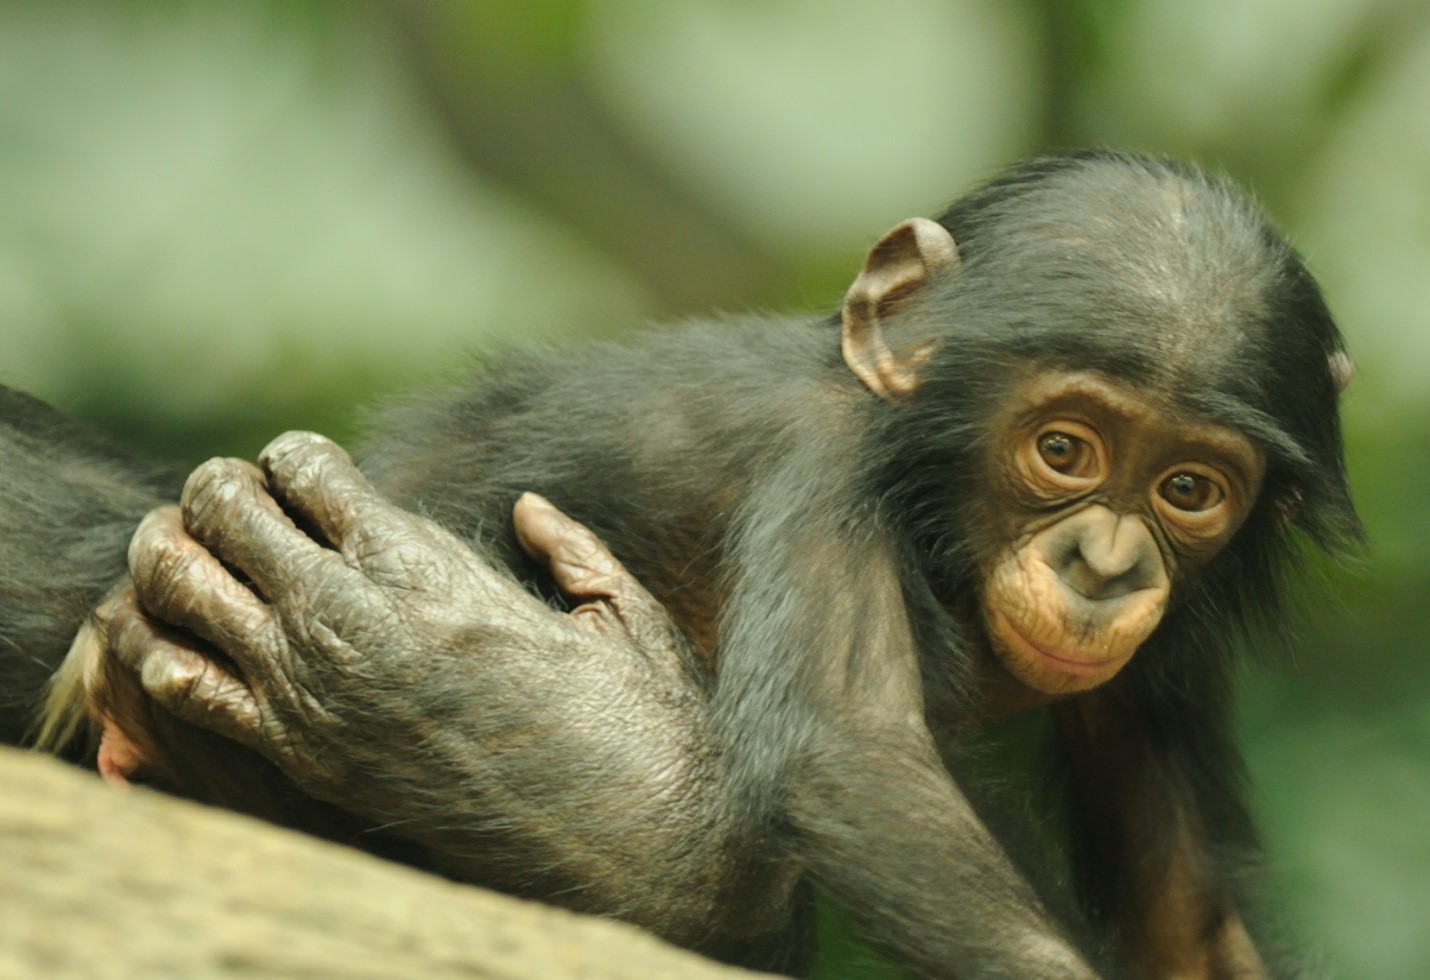 World Great Ape Day and the Cincinnati Zoo